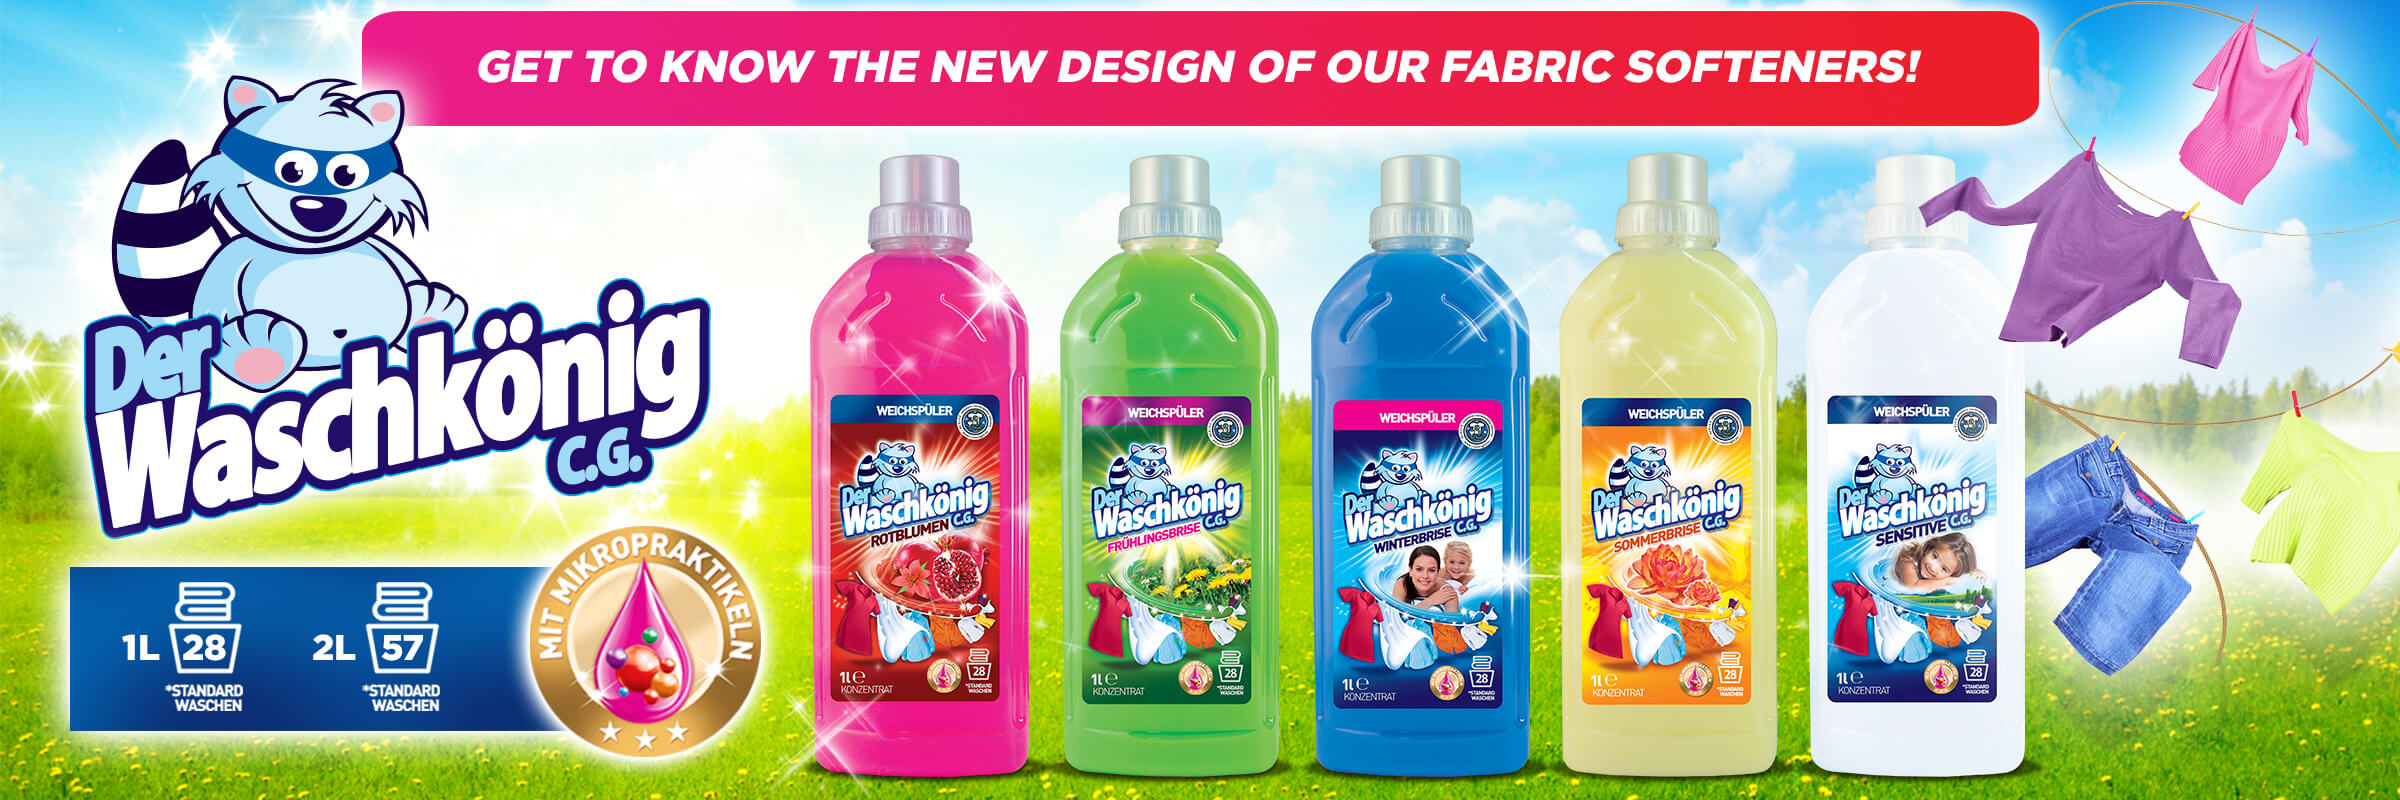 New design of Waschkonig fabric softeners!